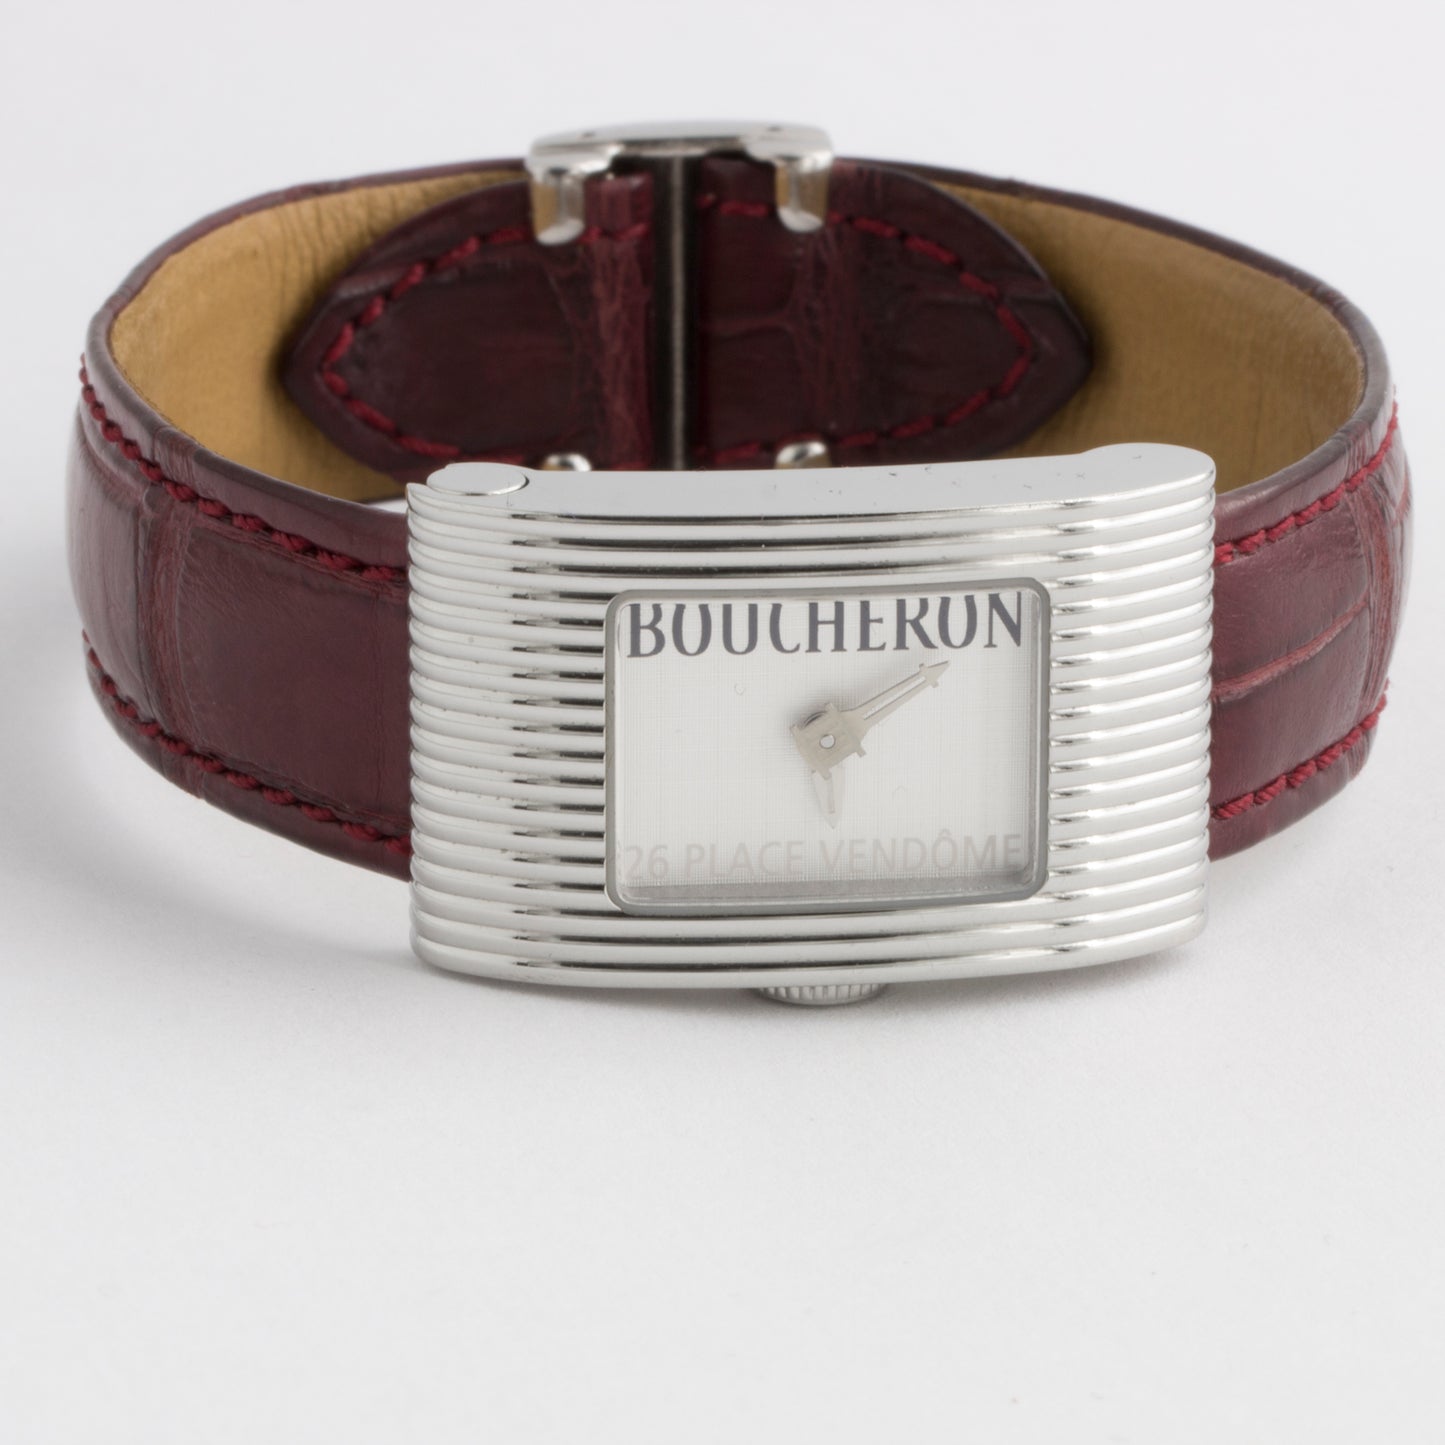 Boucheron Reflet watch